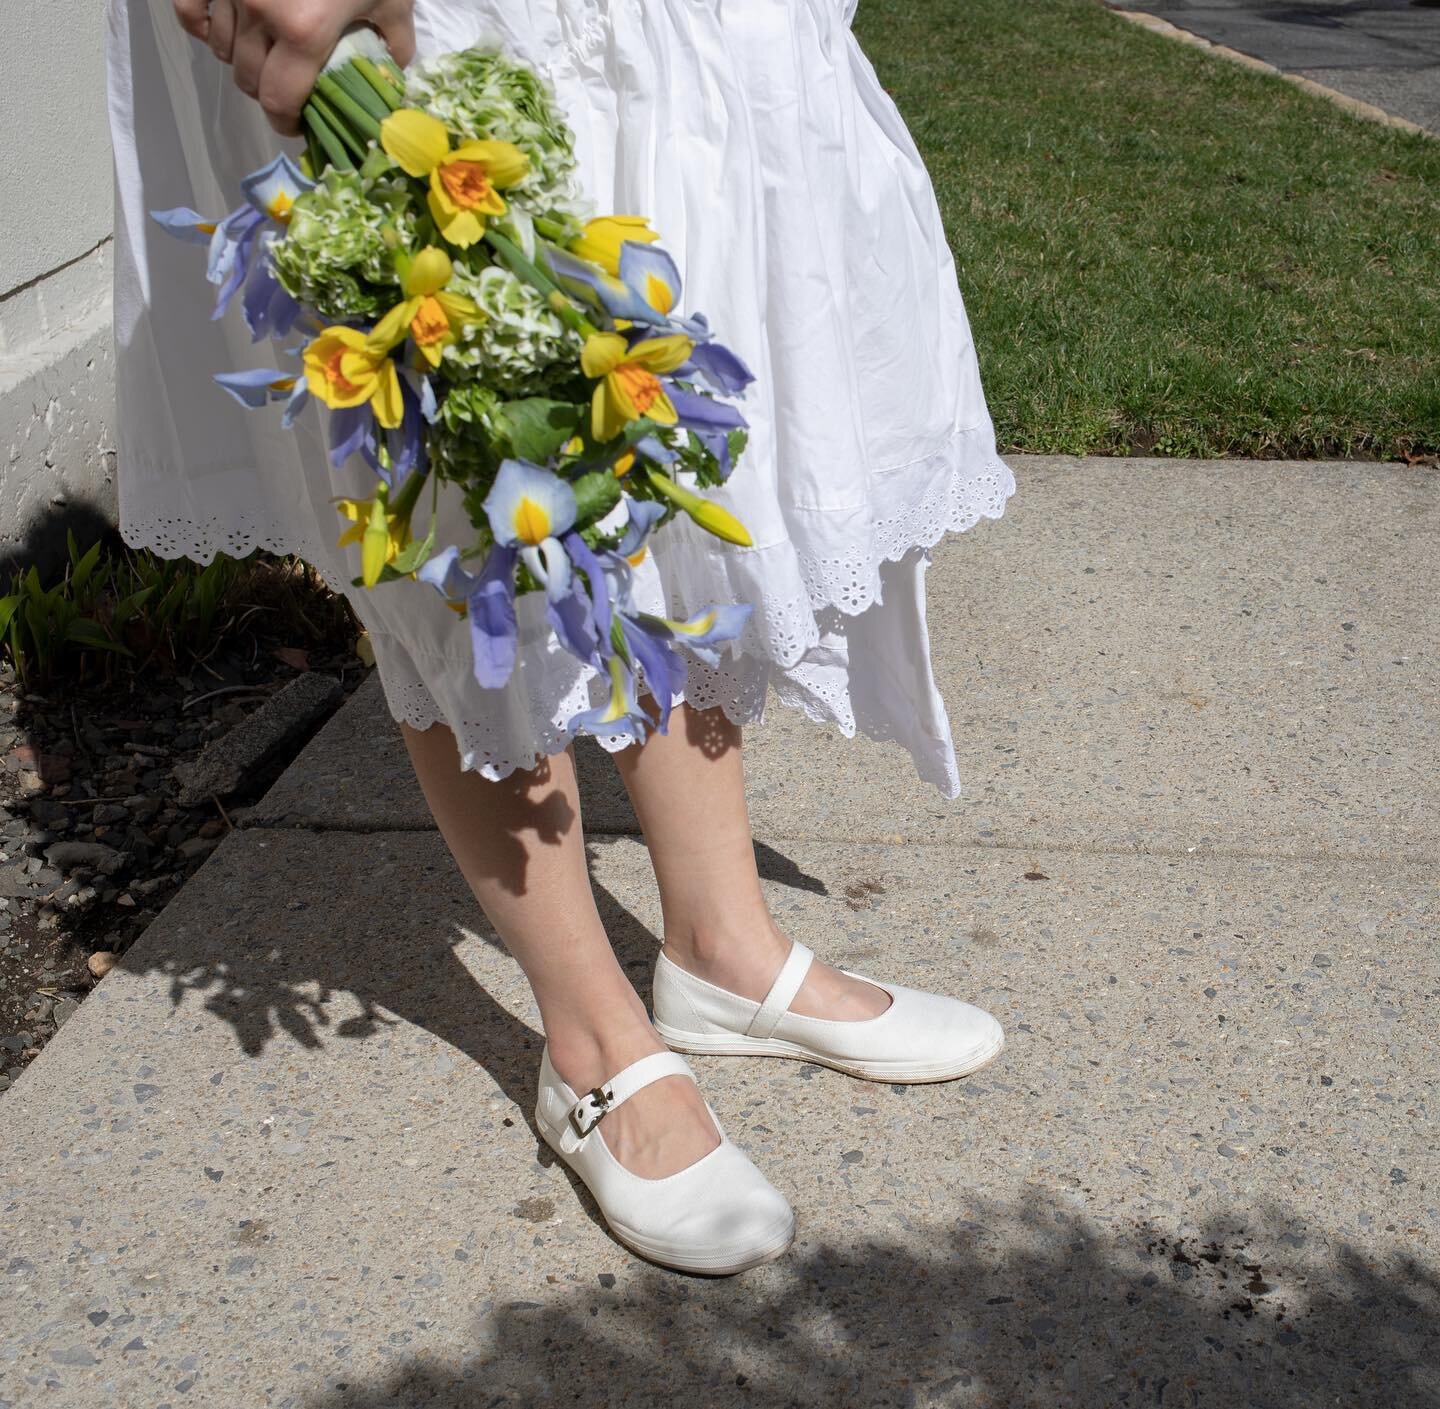 Mary jane, white skirt, and flower💕
.
#weddingbouquet #weddingflower
#event #bridalbouquet #snapbouquet
#뉴저지플라워 #뉴욕플라워